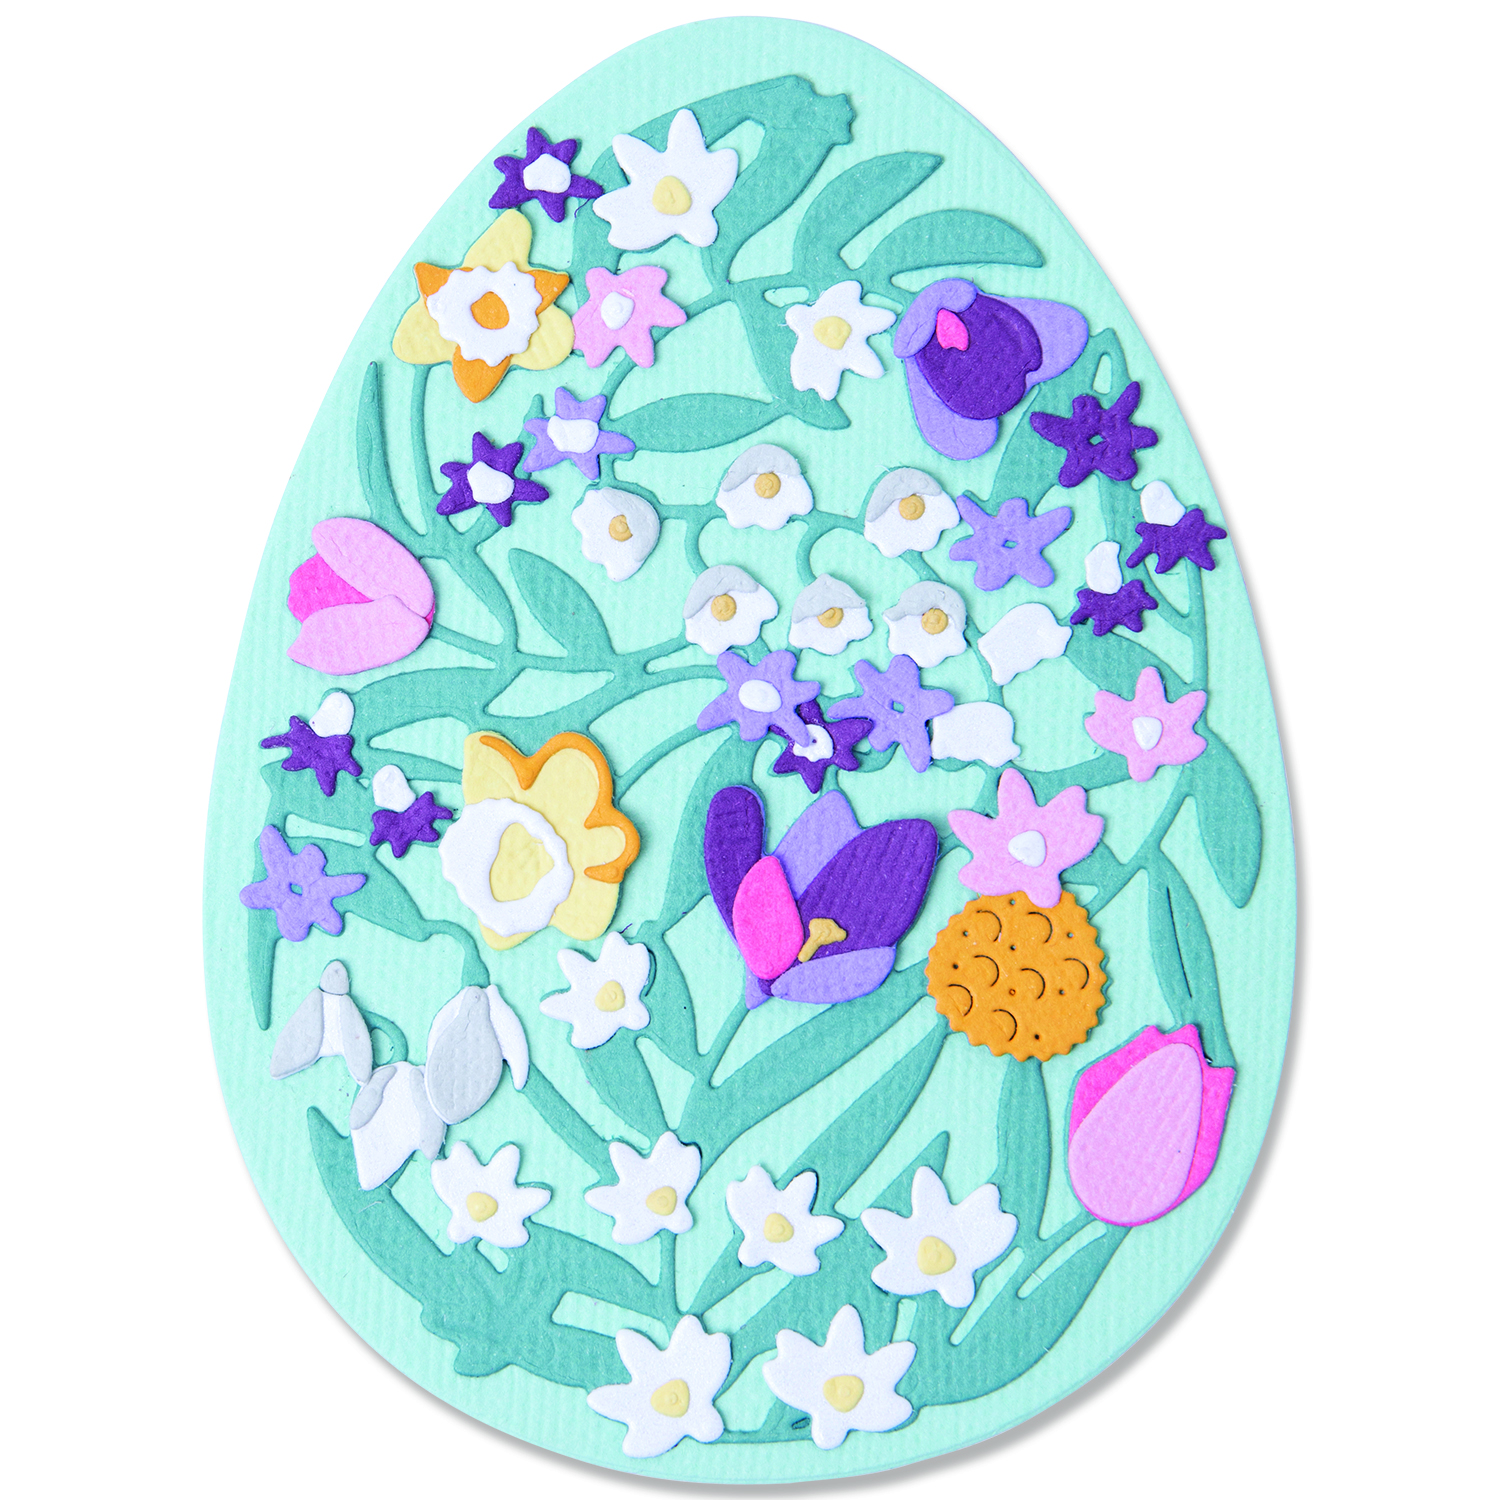 665818_Intricate_Floral_Easter_Egg_CMYK.jpg